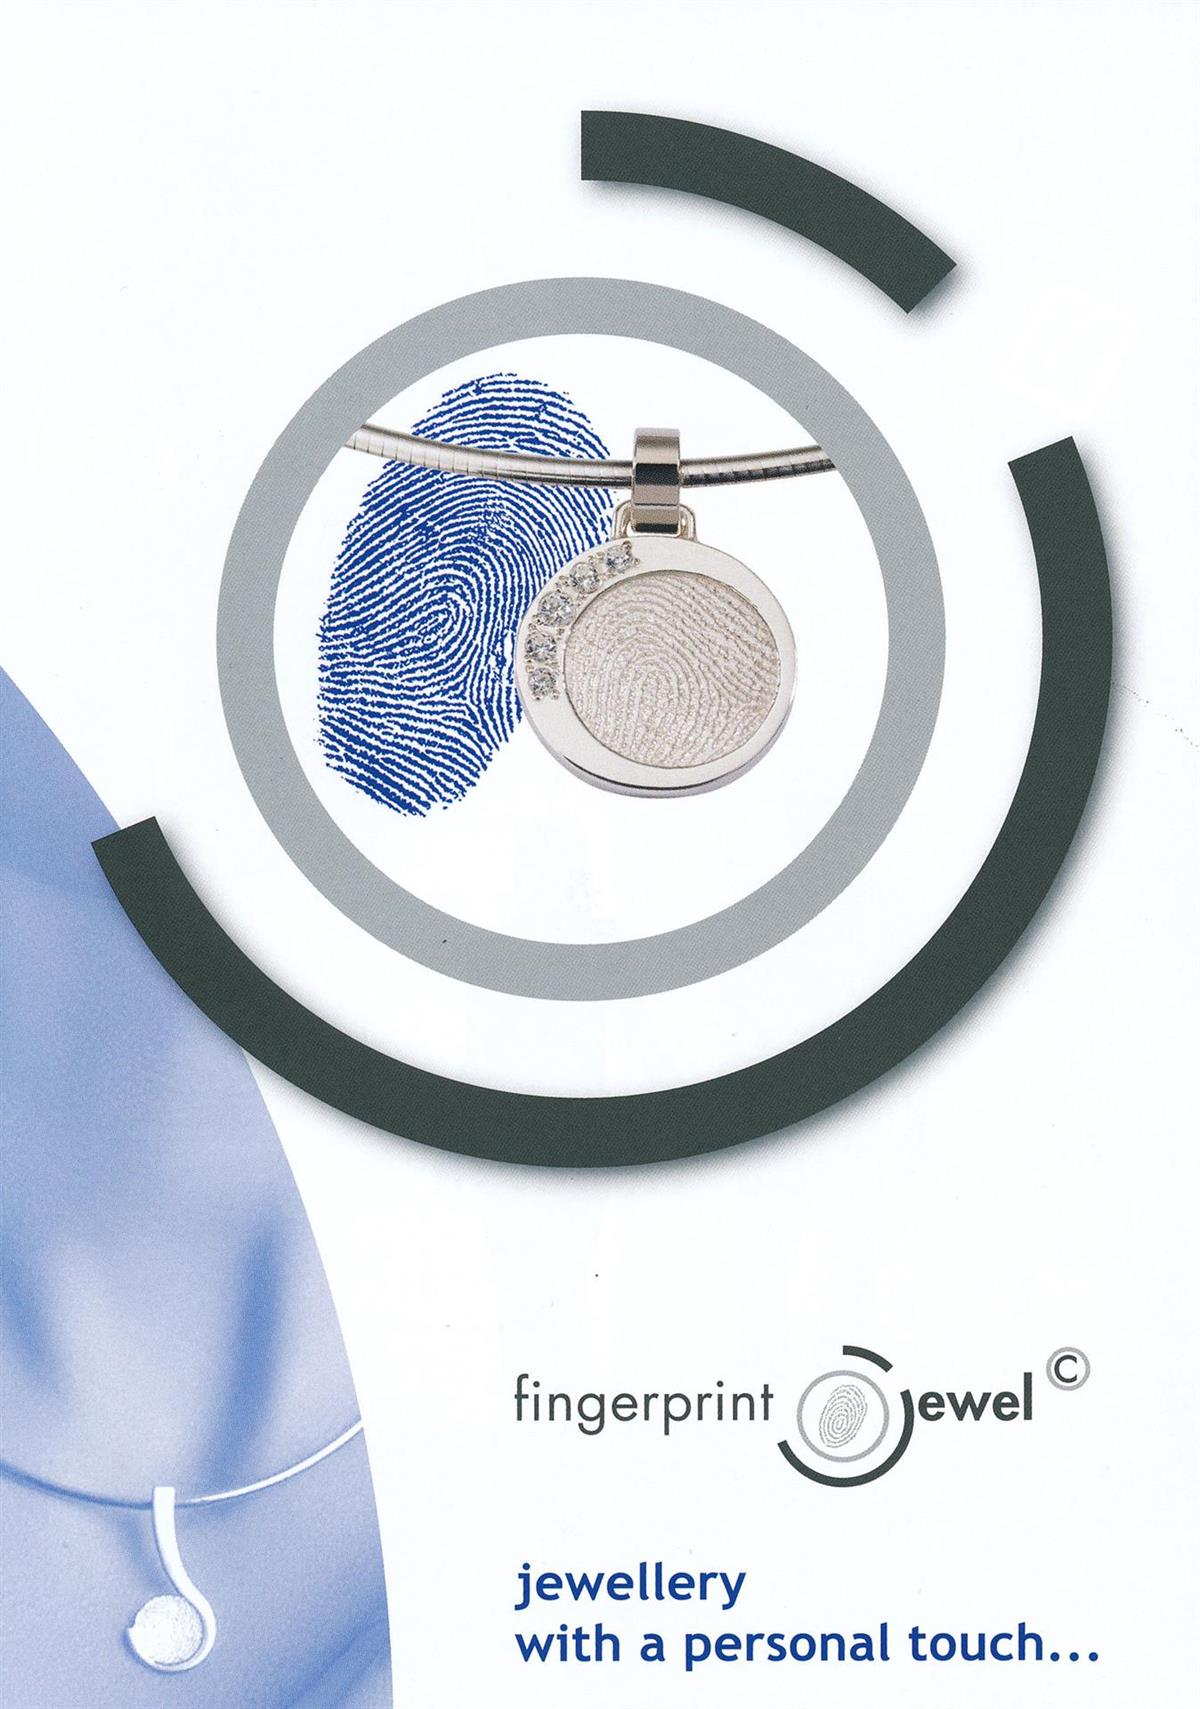 Bestattungen Gierse - Fingerprint Jewel